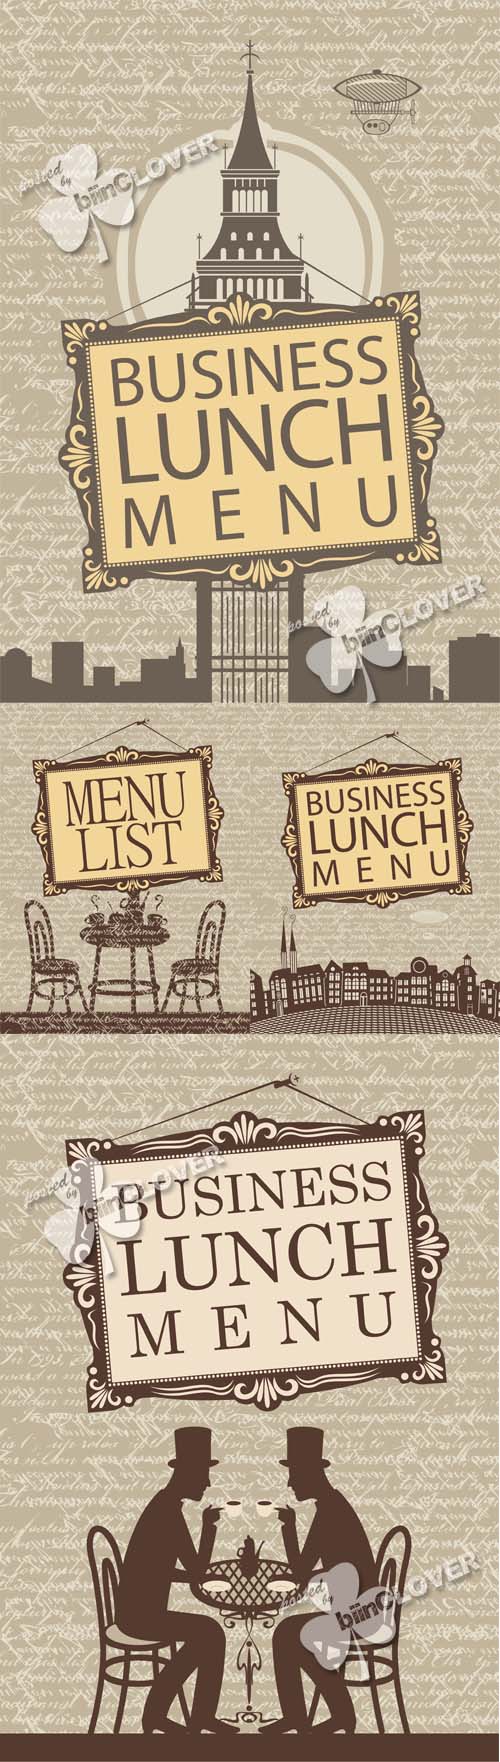 Business lunch menu design 0460